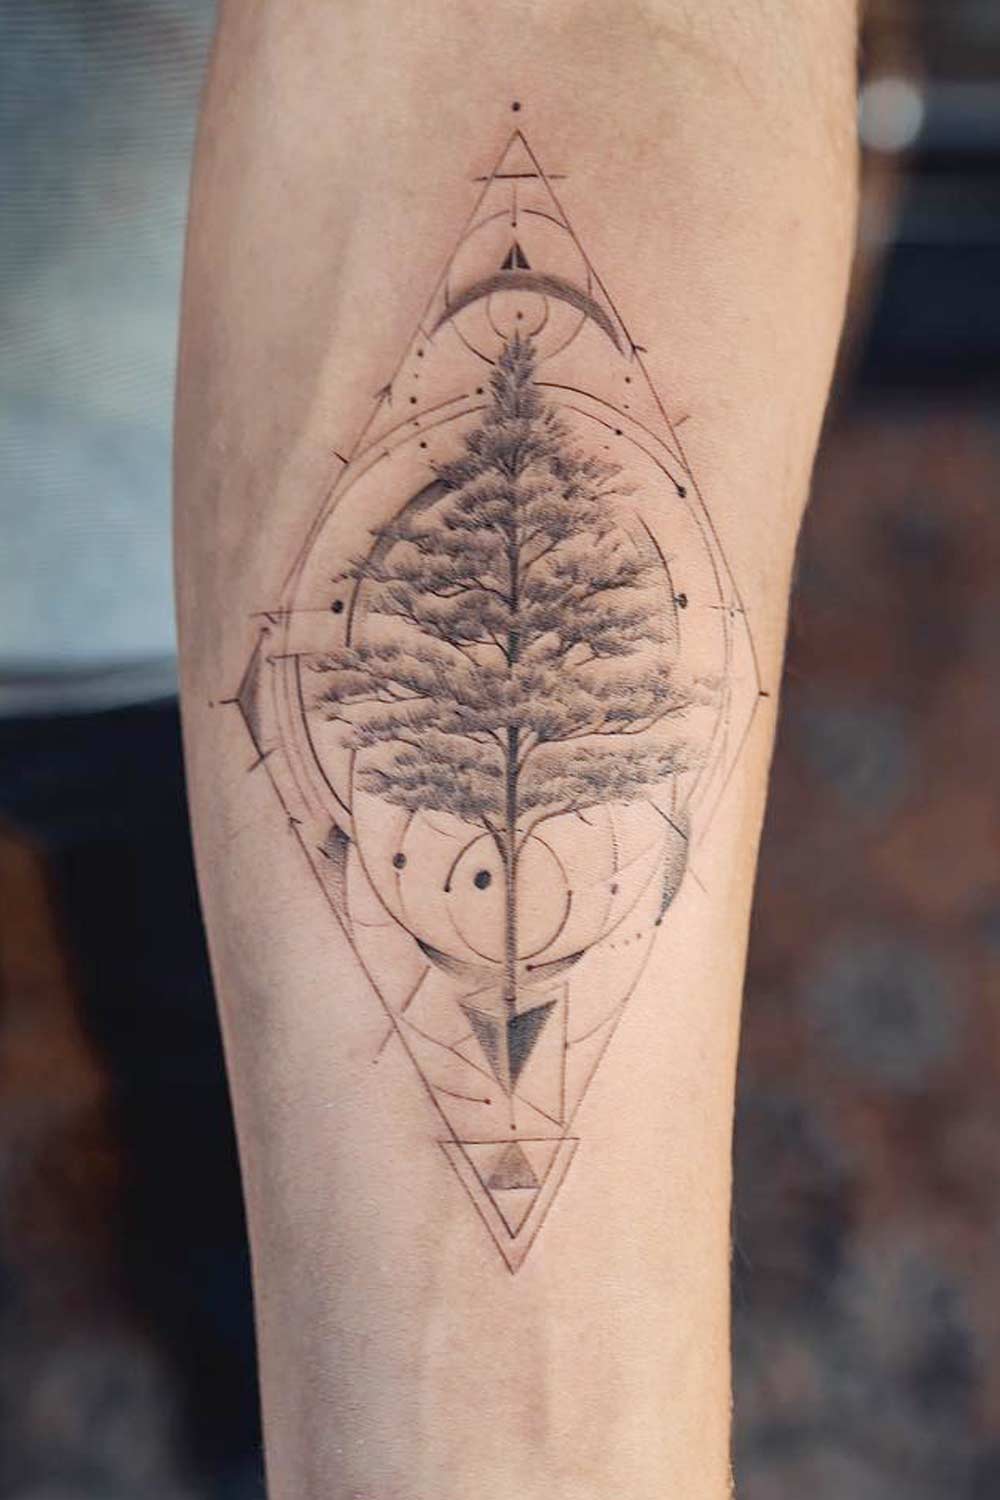 Tree with Geometric Elements Tattoo